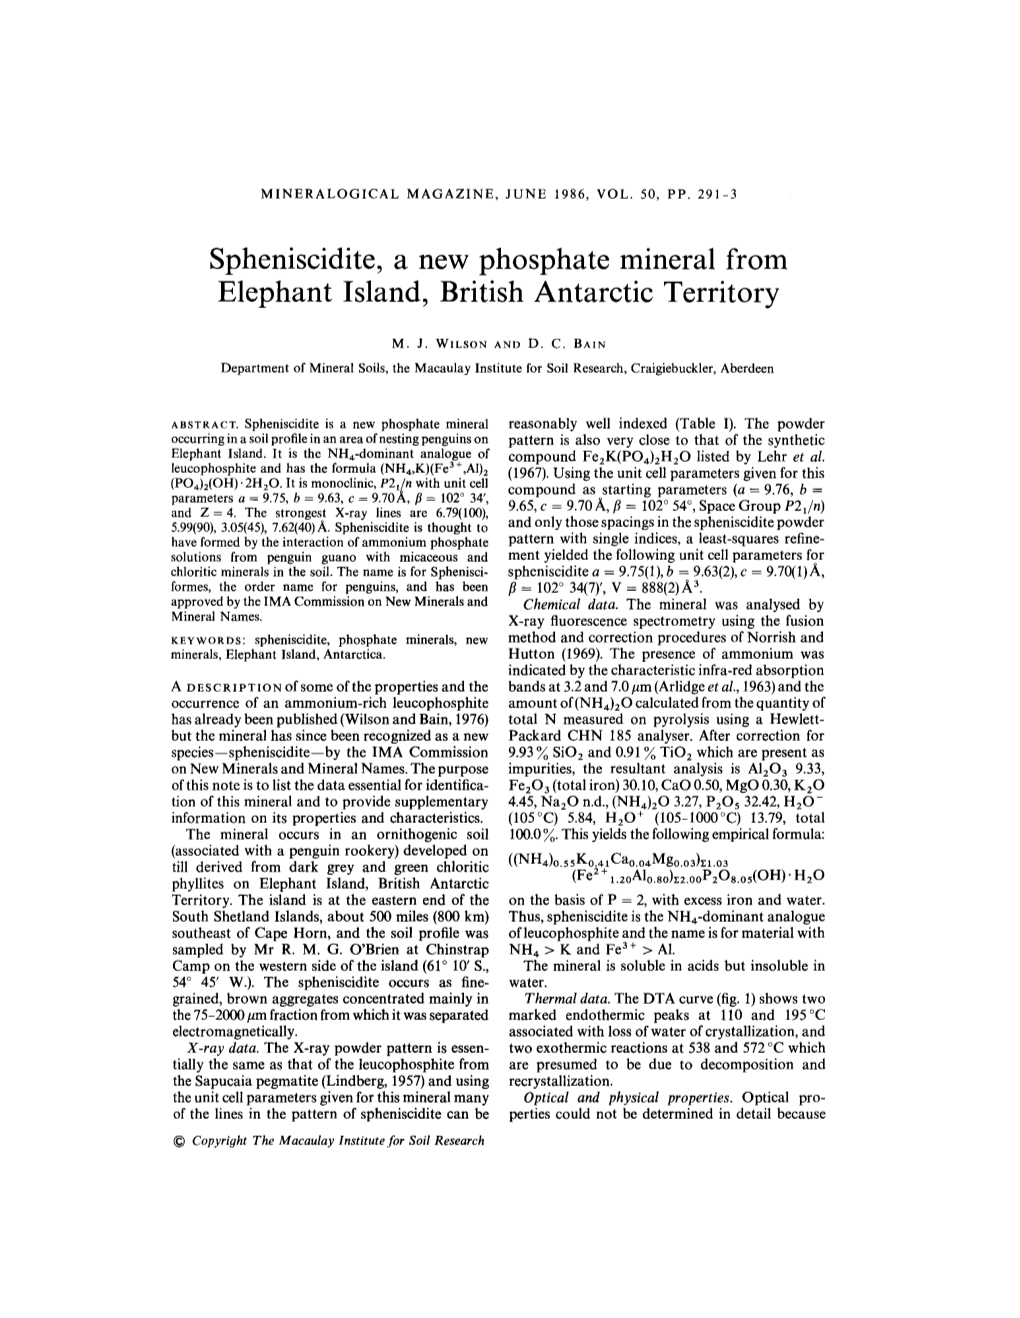 Spheniscidite, a New Phosphate Mineral from Elephant Island, British Antarctic Territory